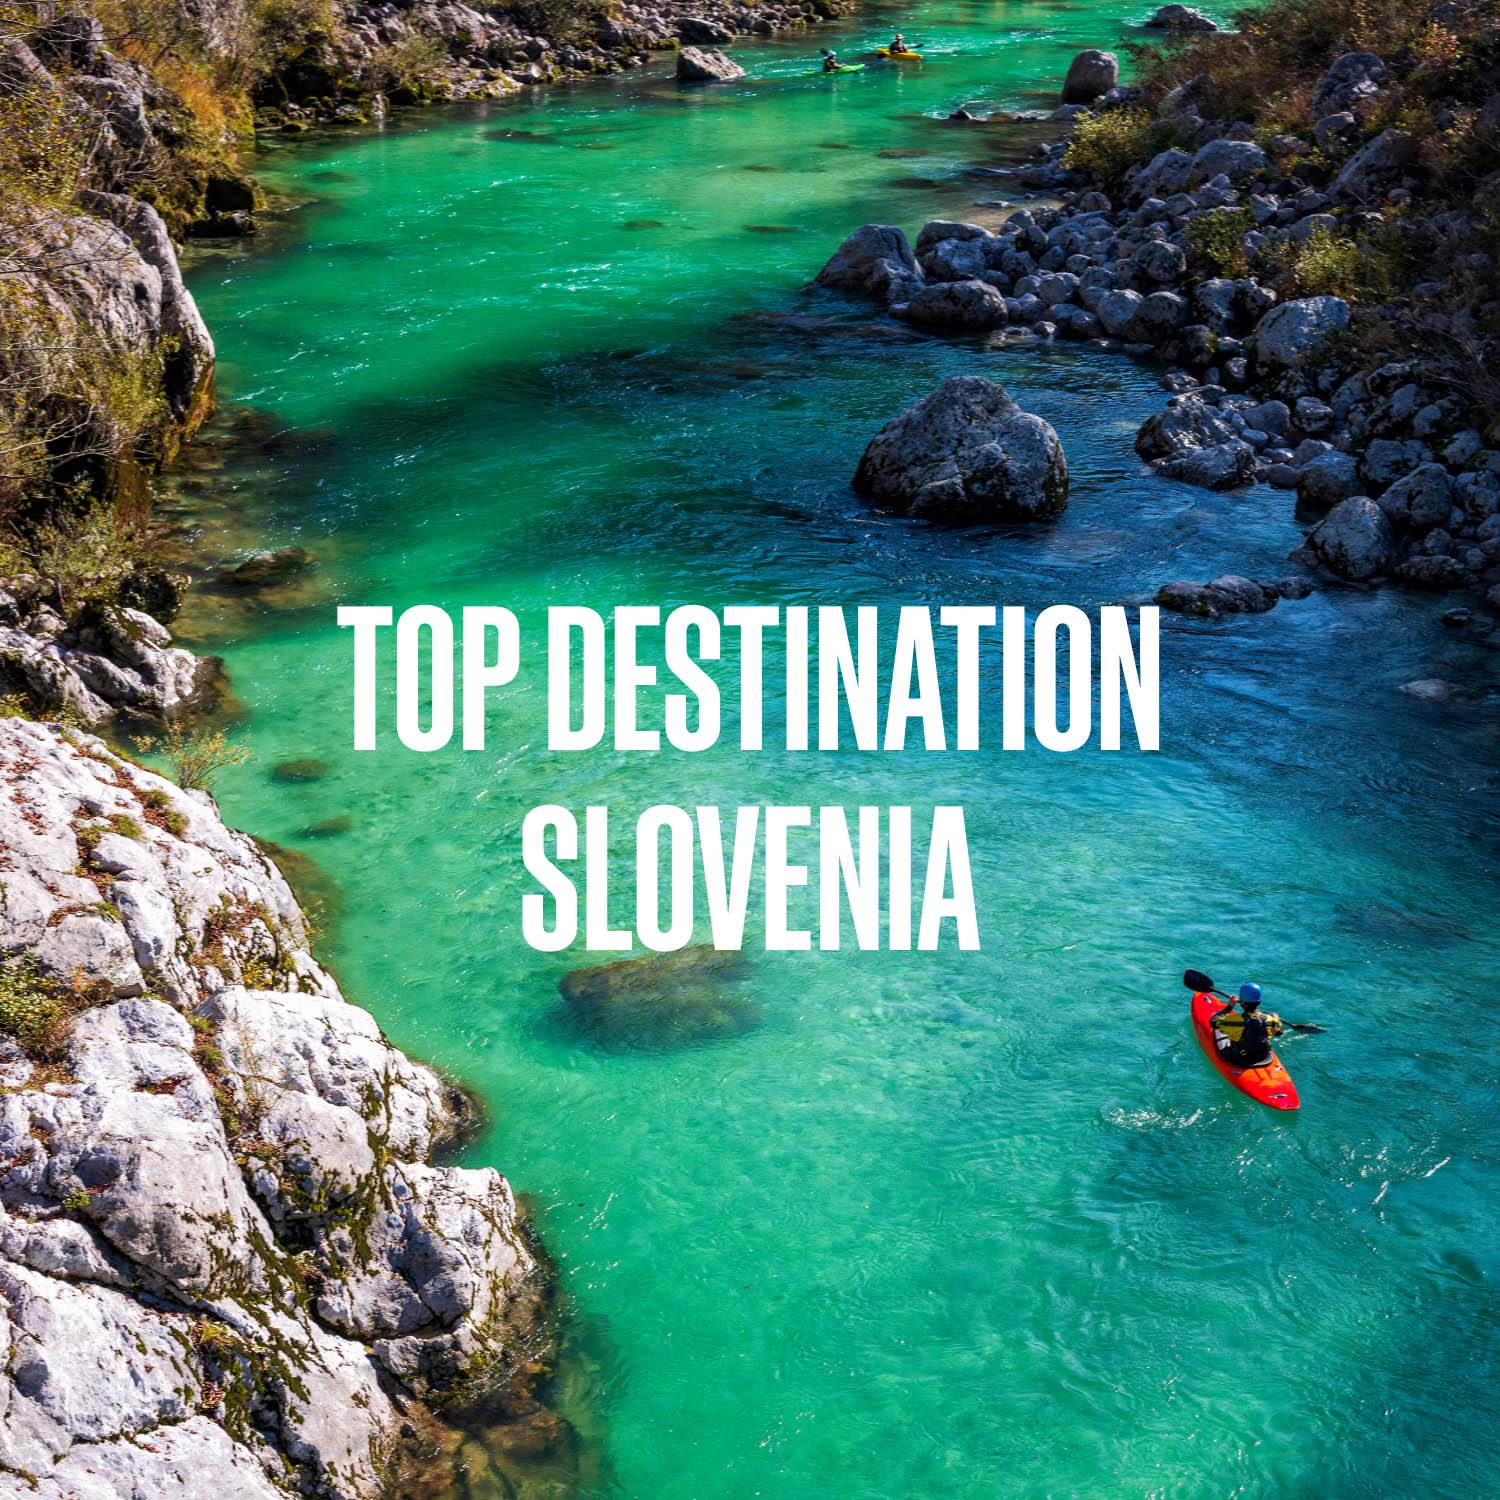 Top Destination Slovenia